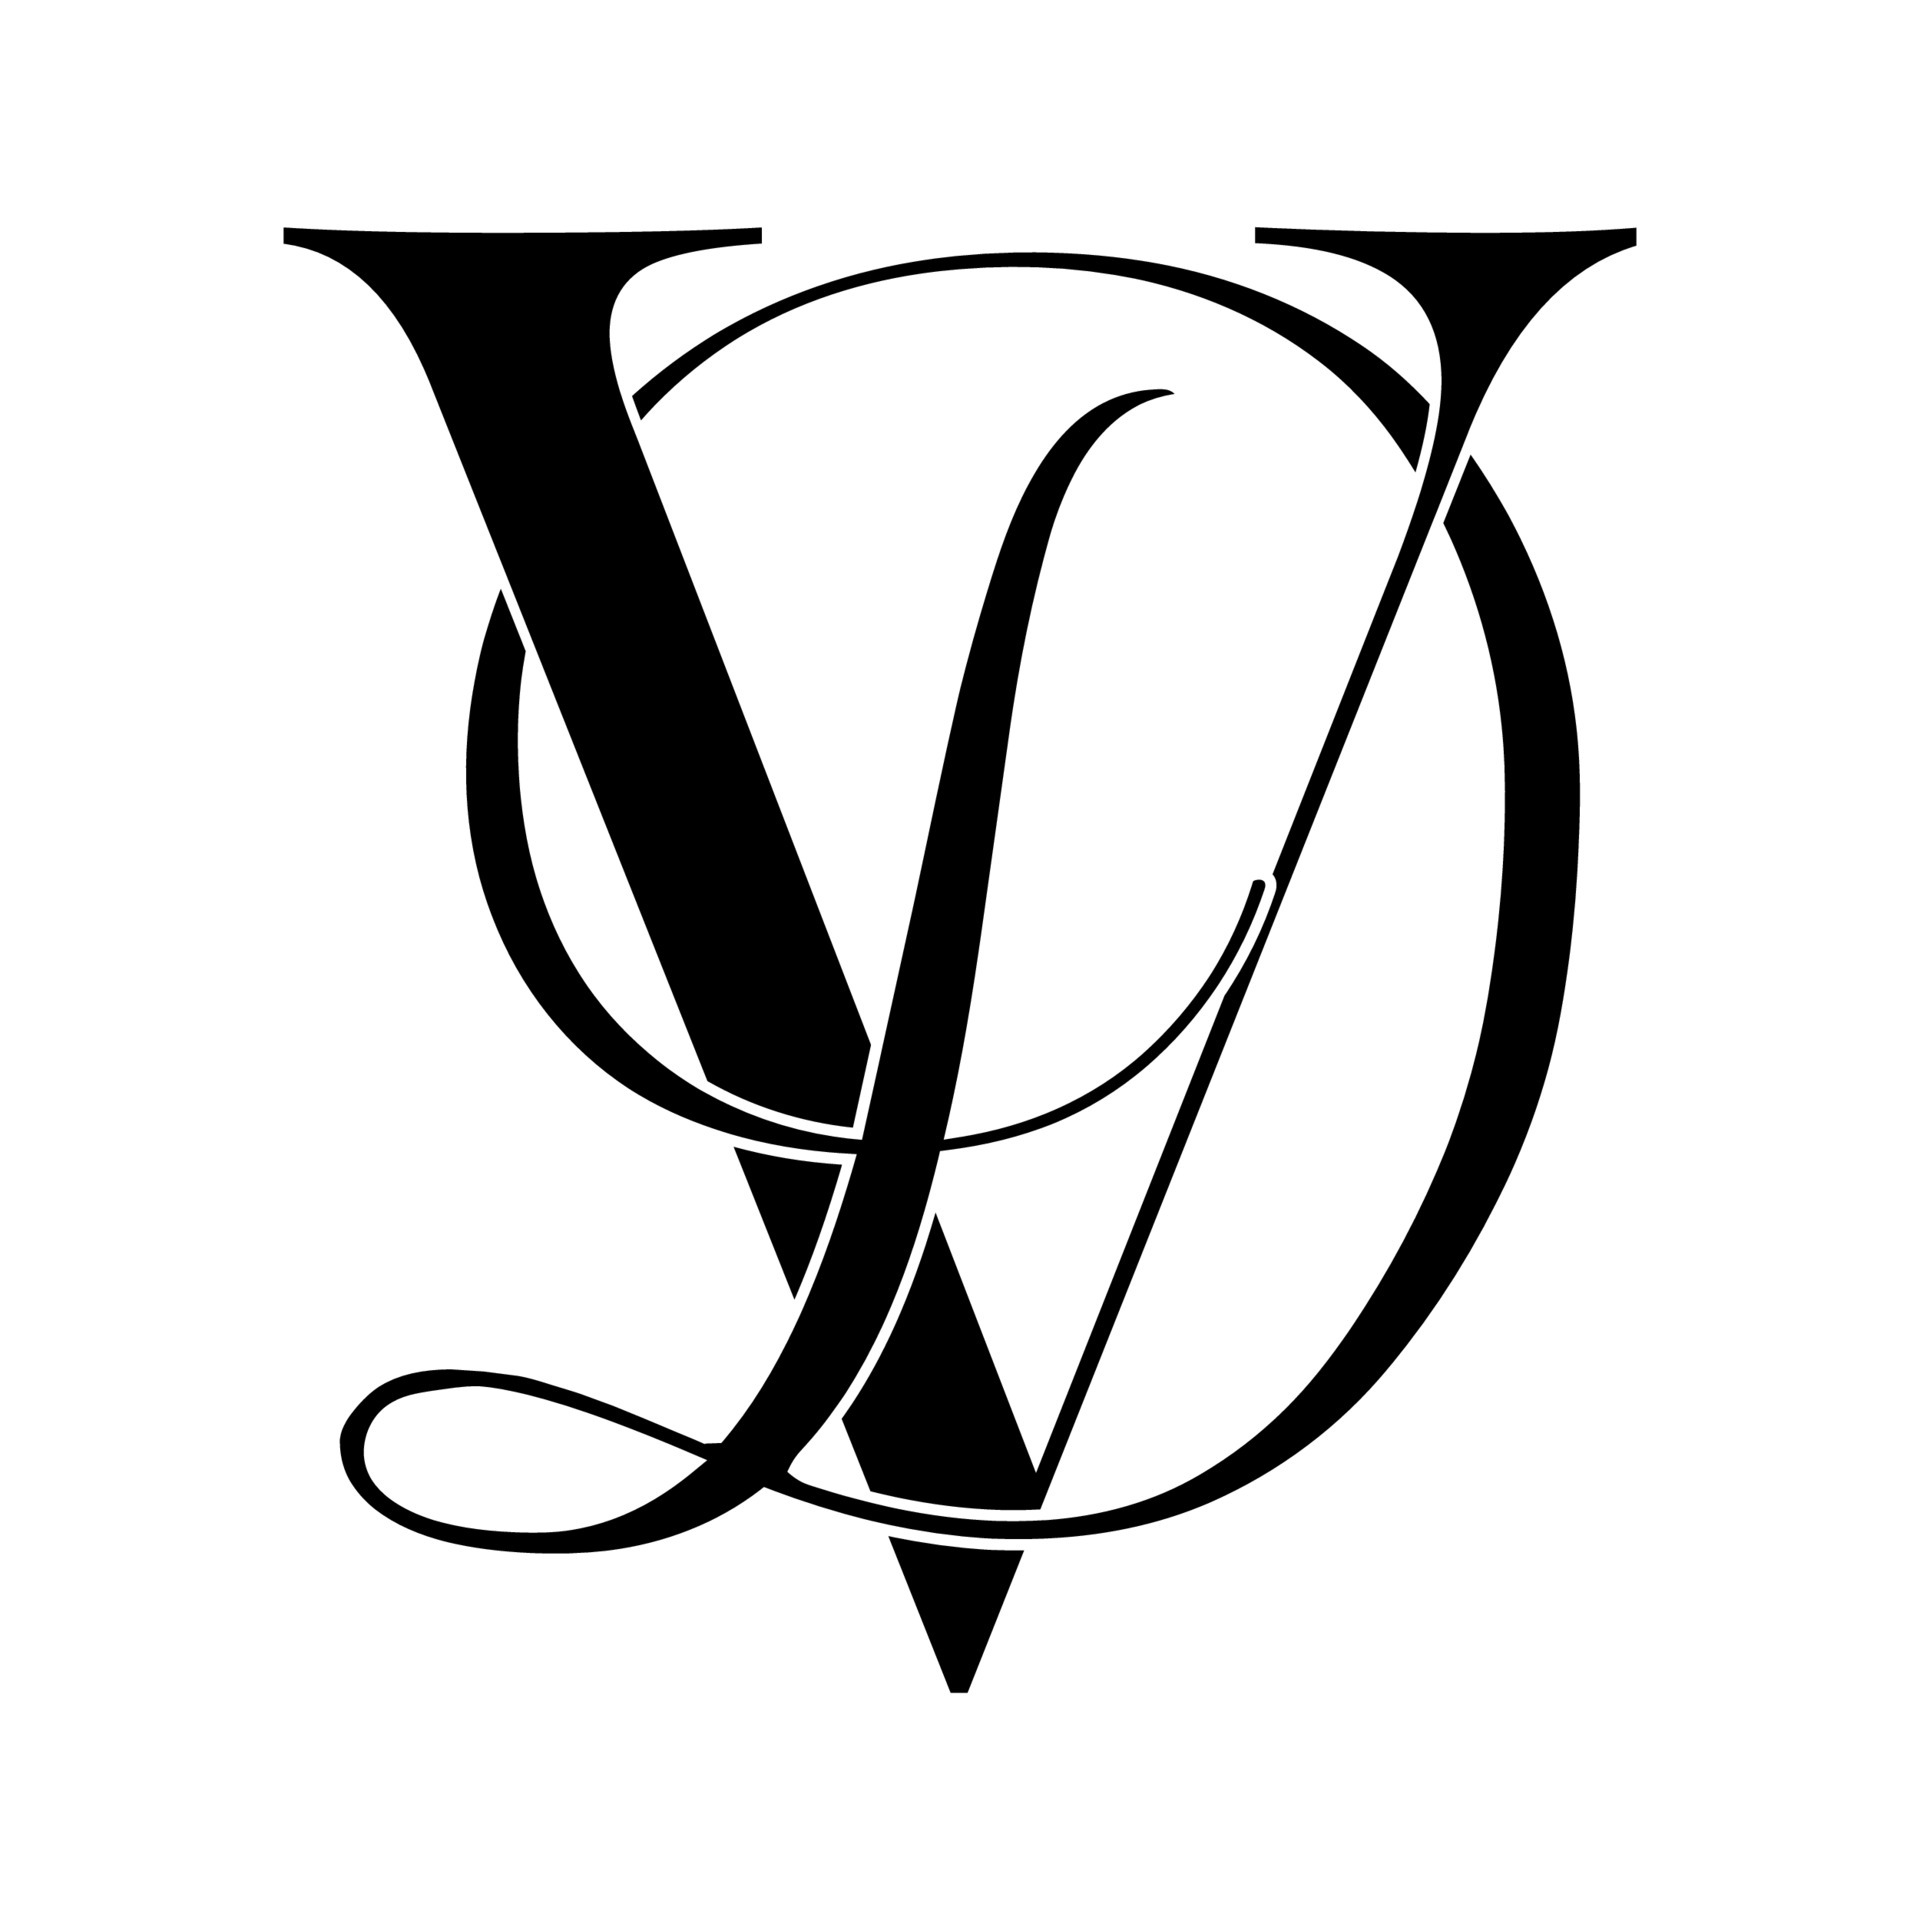 vd ,dv, monogram logo. Calligraphic signature icon. Wedding Logo